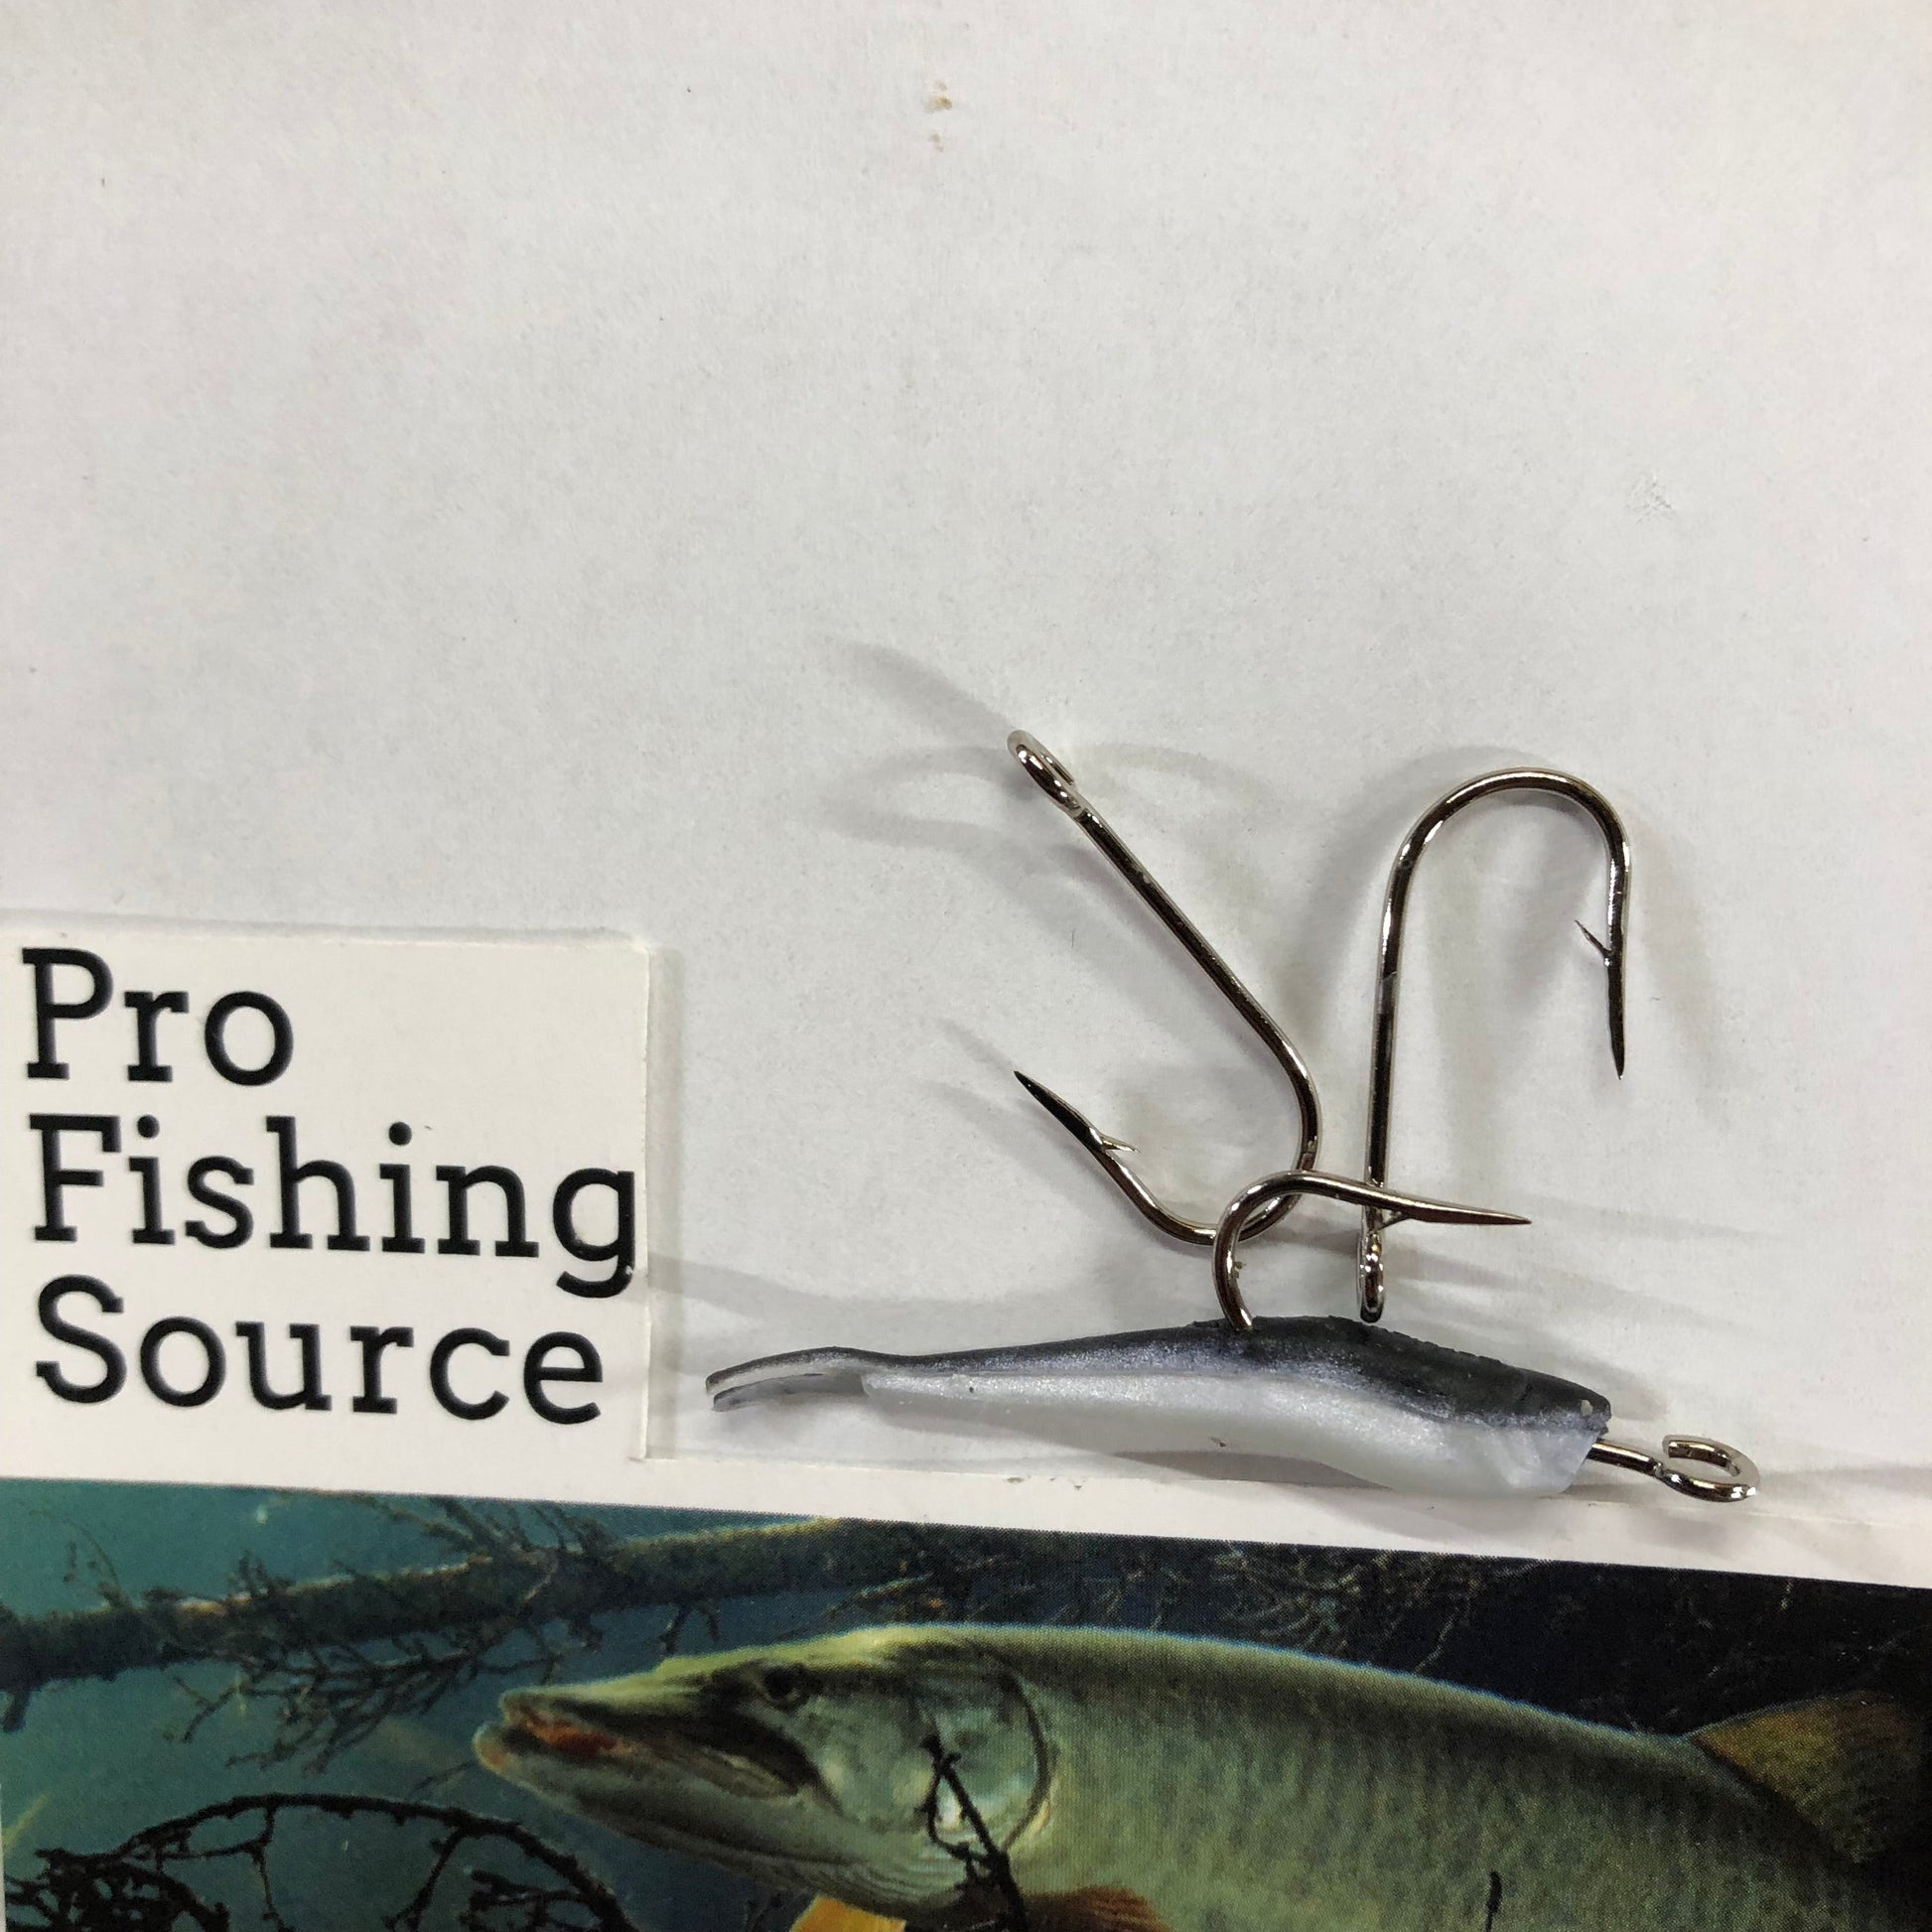 Kastmaster Fishing Spoon 1/12 Oz Panfish Acme Tackle Company – Pro Fishing  Source